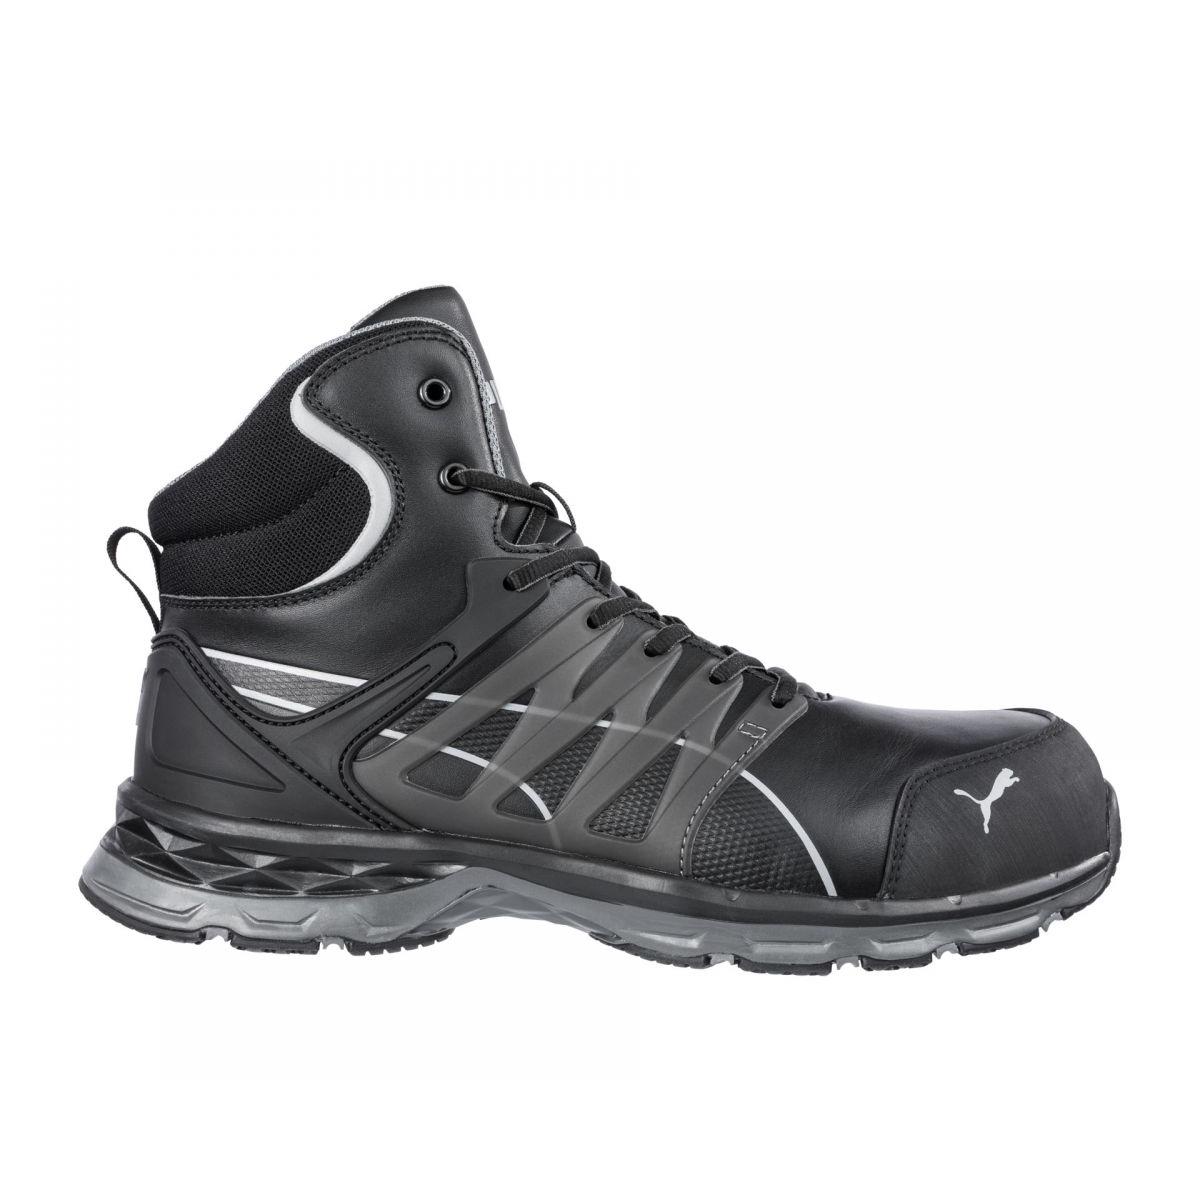 PUMA Safety Men's Velocity 2.0 Mid Composite Toe ESD Work Boot Black - 633805 ONE SIZE BLACK - BLACK, 11